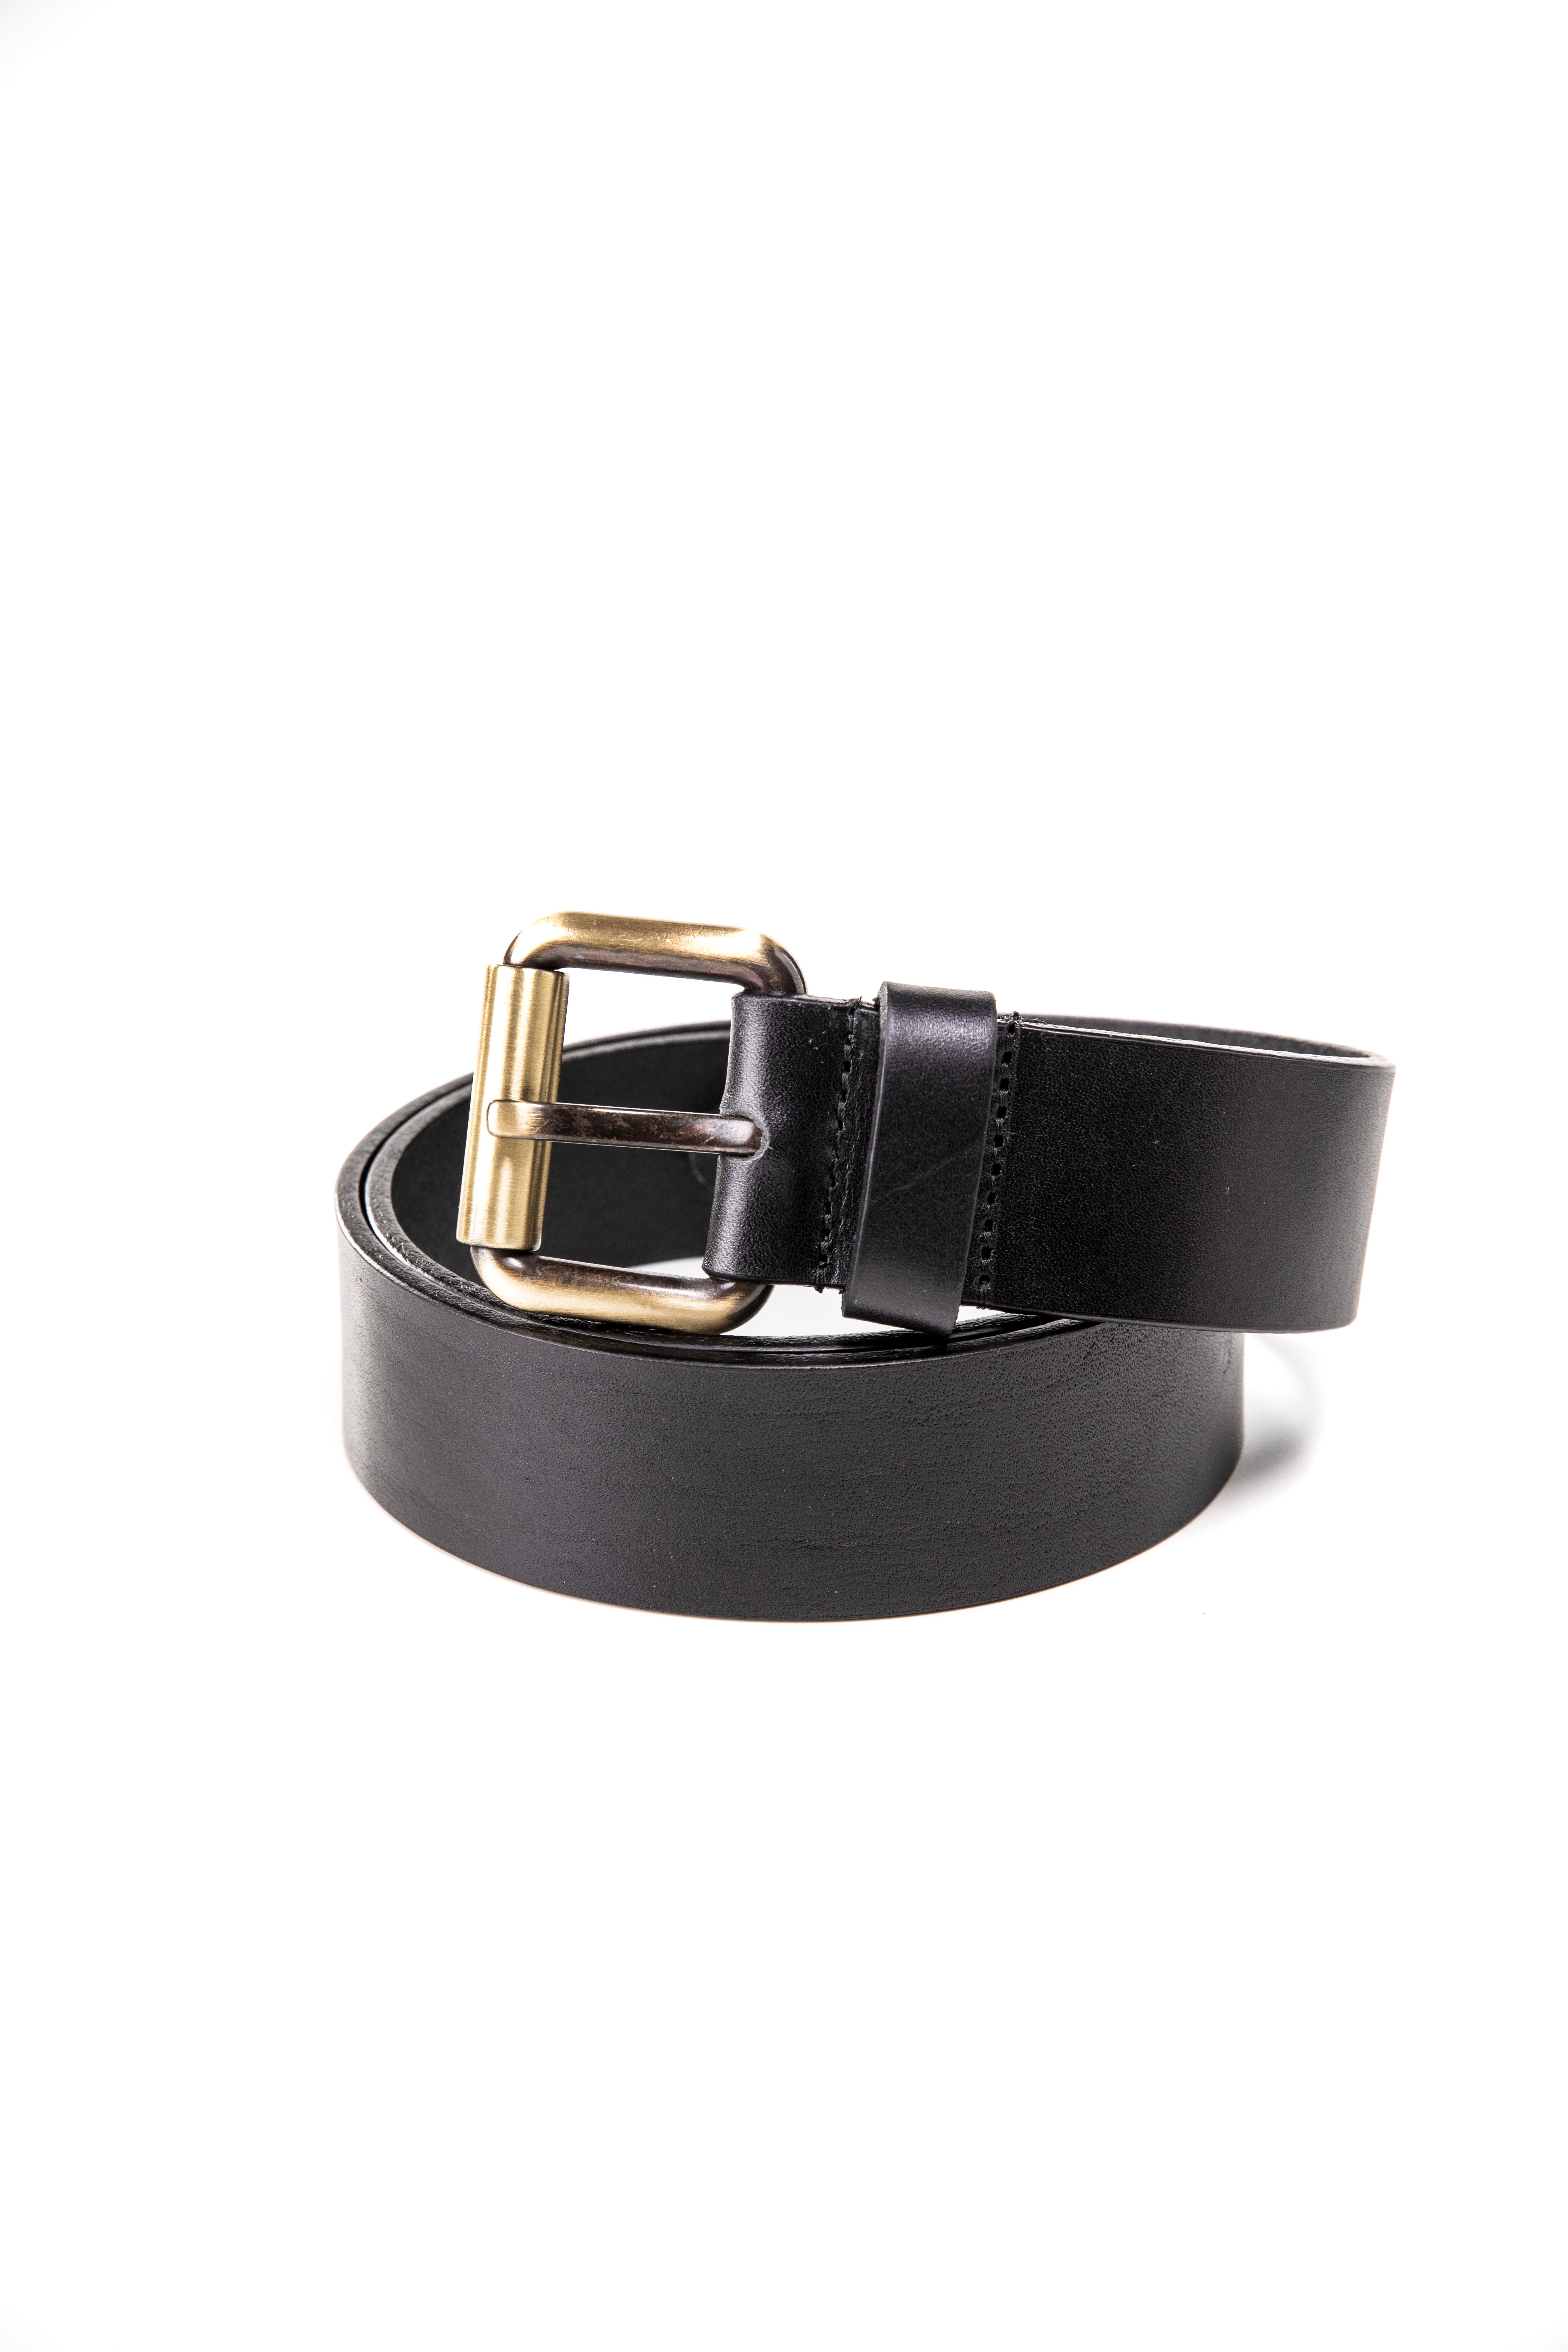 THE DUST COMPANY Black Leather Belt Black Size Large | Verishop